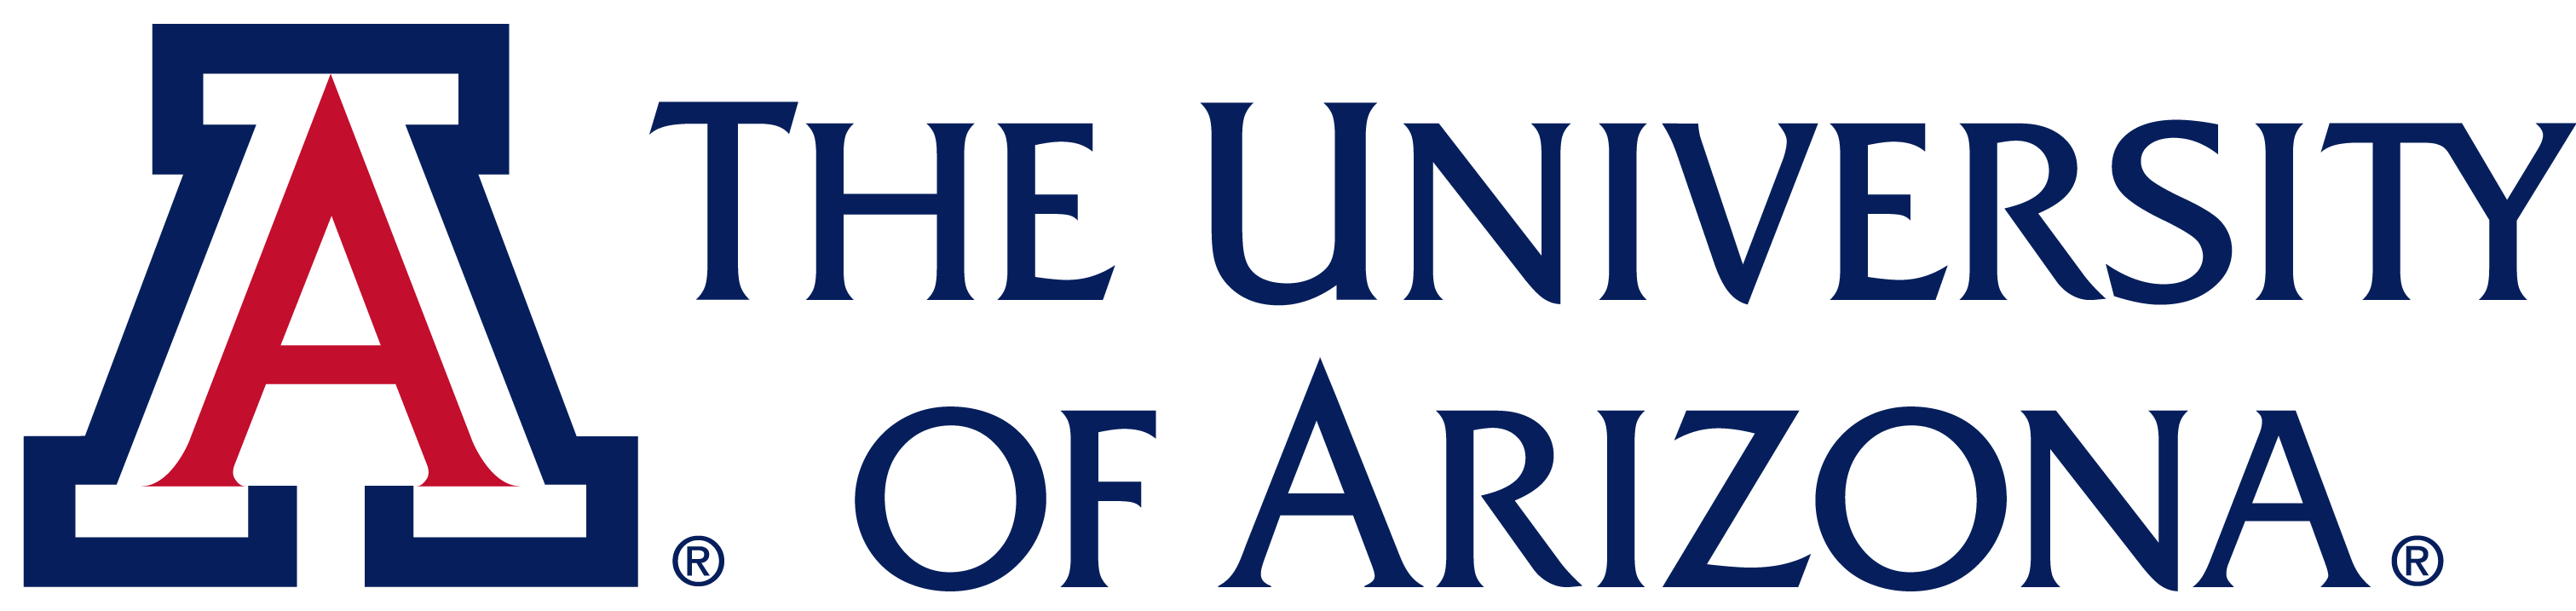 Uofa Logo - University of Arizona Seal and Logos Vector Free Download